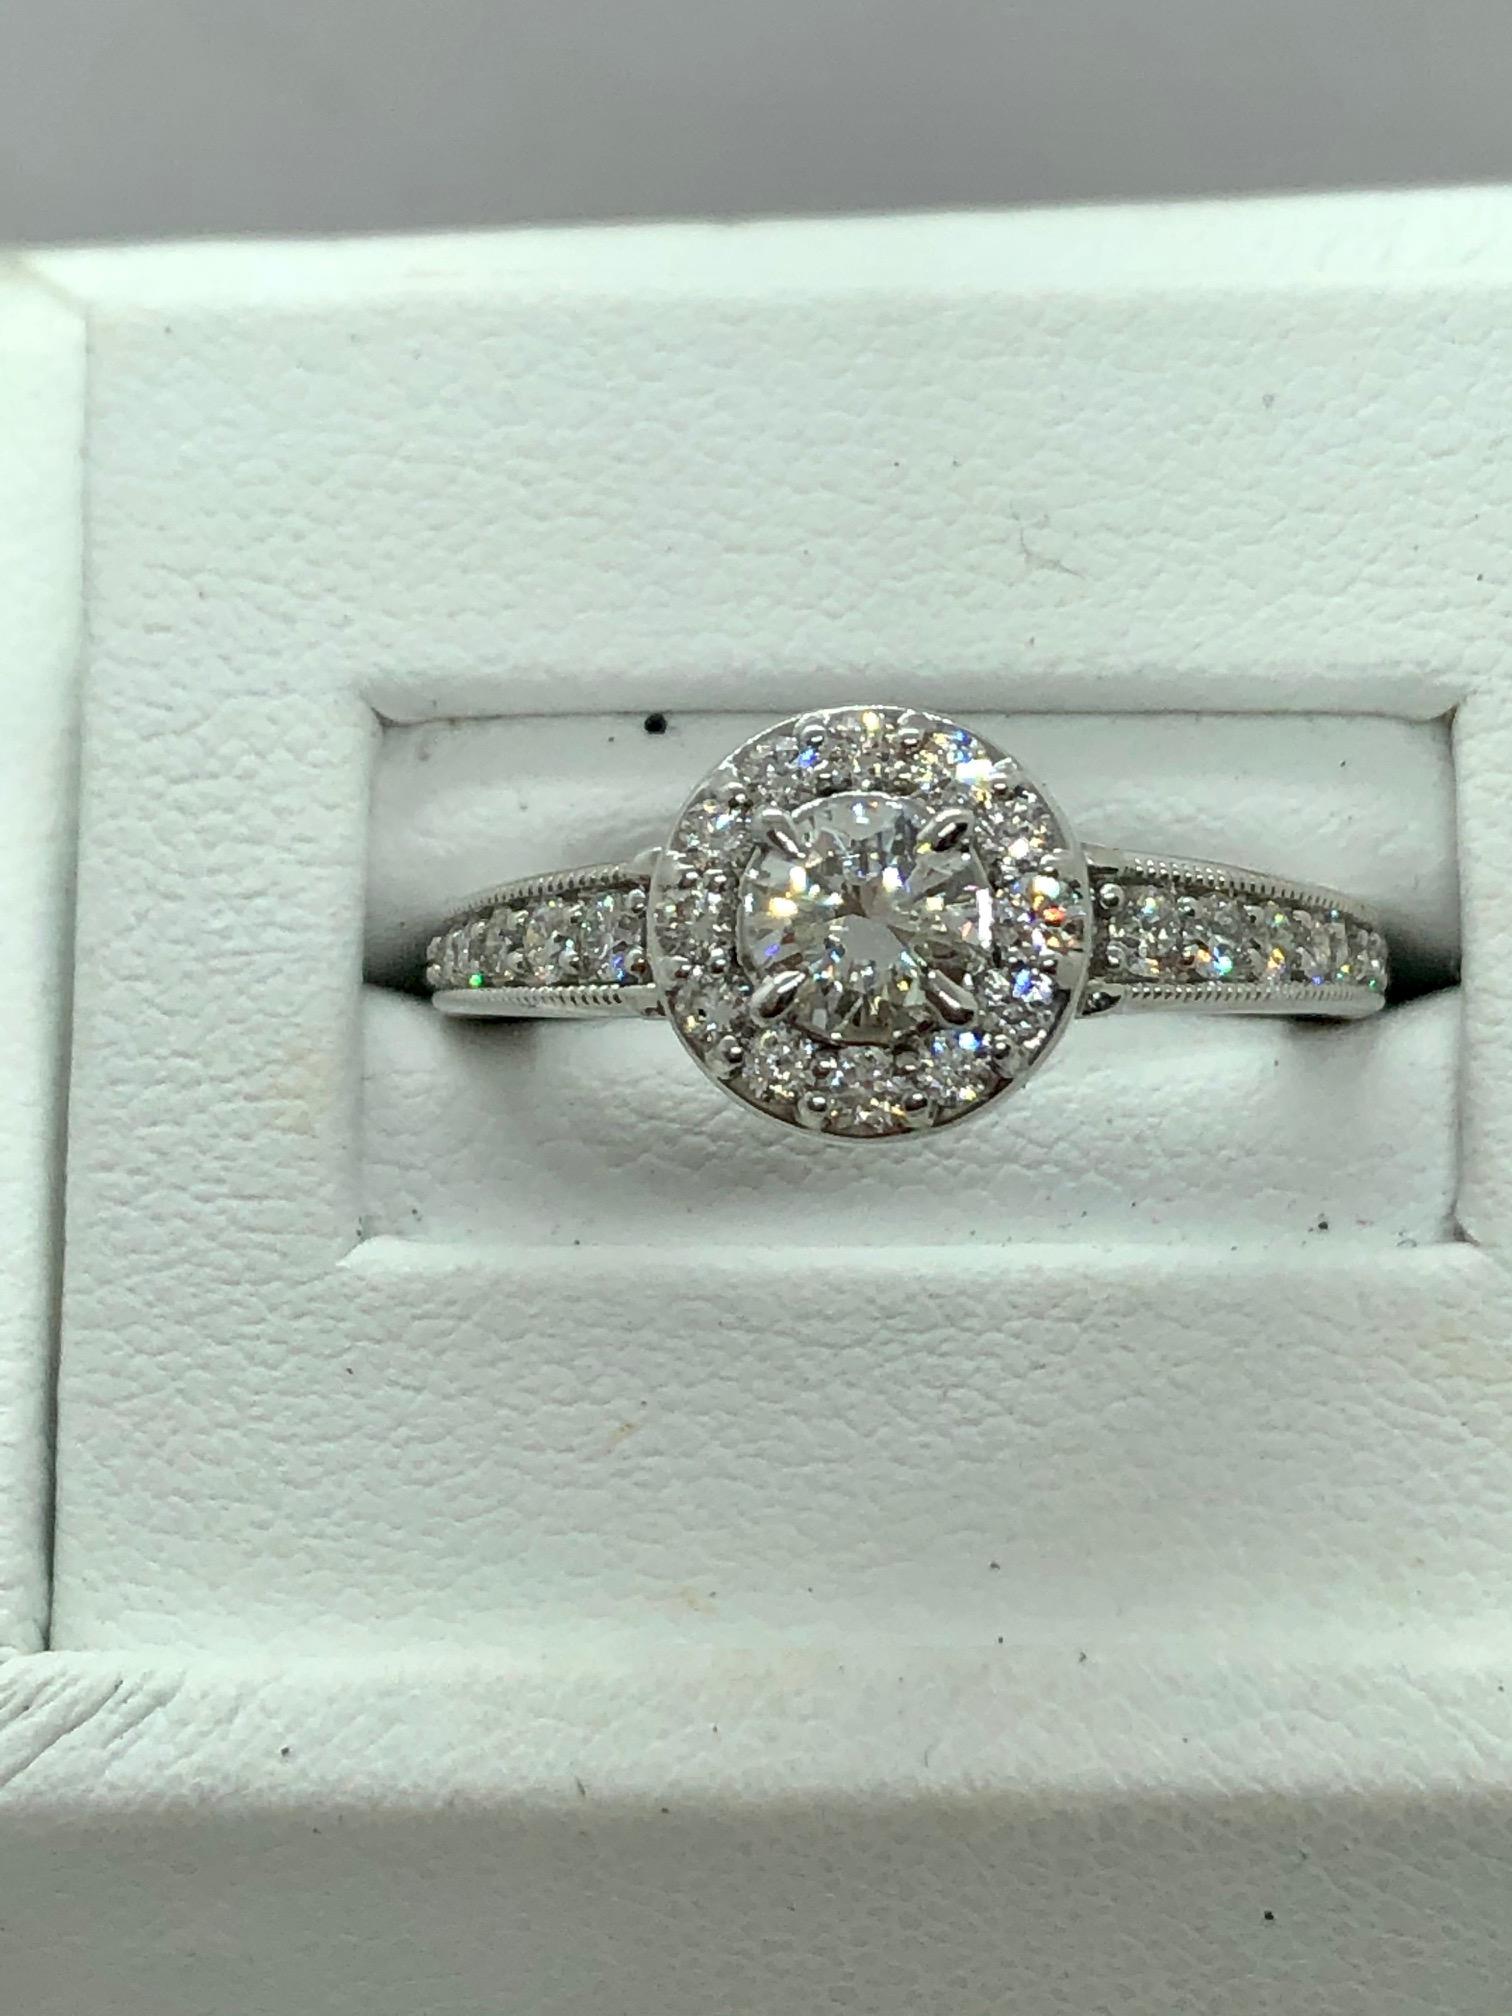 DIAMOND ENGAGEMENT RING 0.91 CARAT TOTAL WEIGHT SET IN 14KWG G VVS1 GIA

Round Diamond Center Stone 0.41 carats 
 
